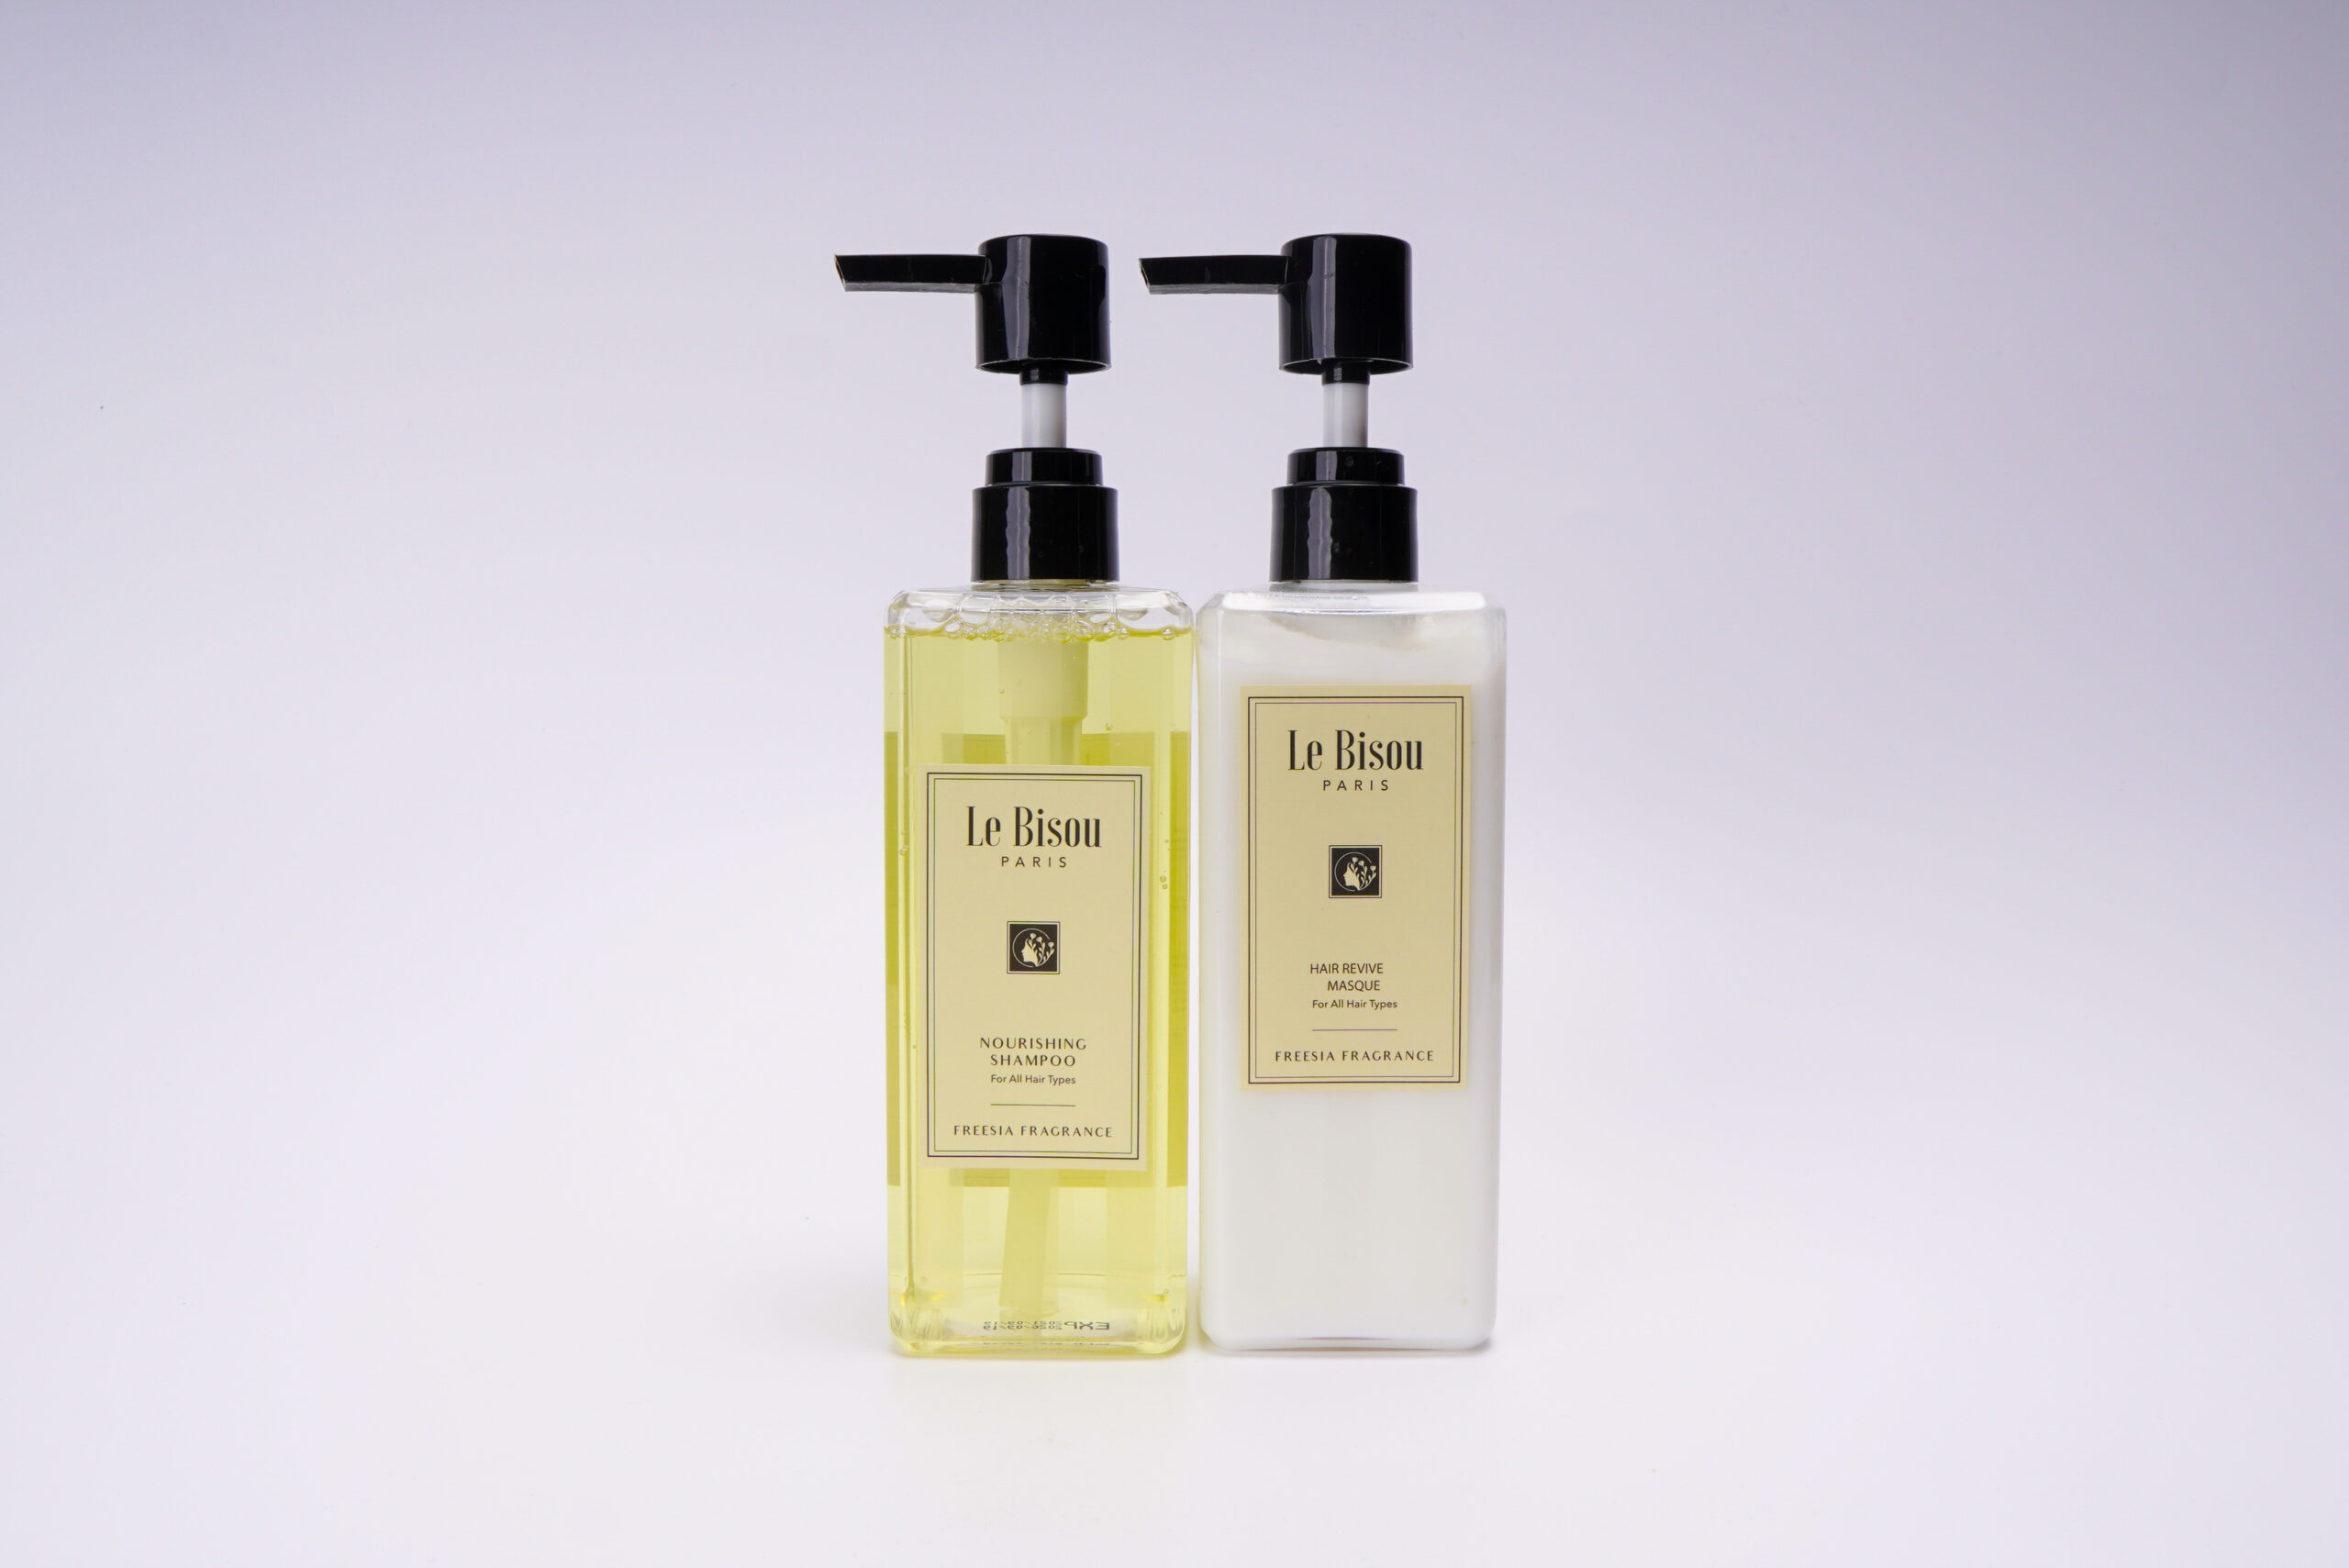 Le Bisou Freesia Fragrance Nourishing Shampoo & Hair Revive Masque -  MyShoppo